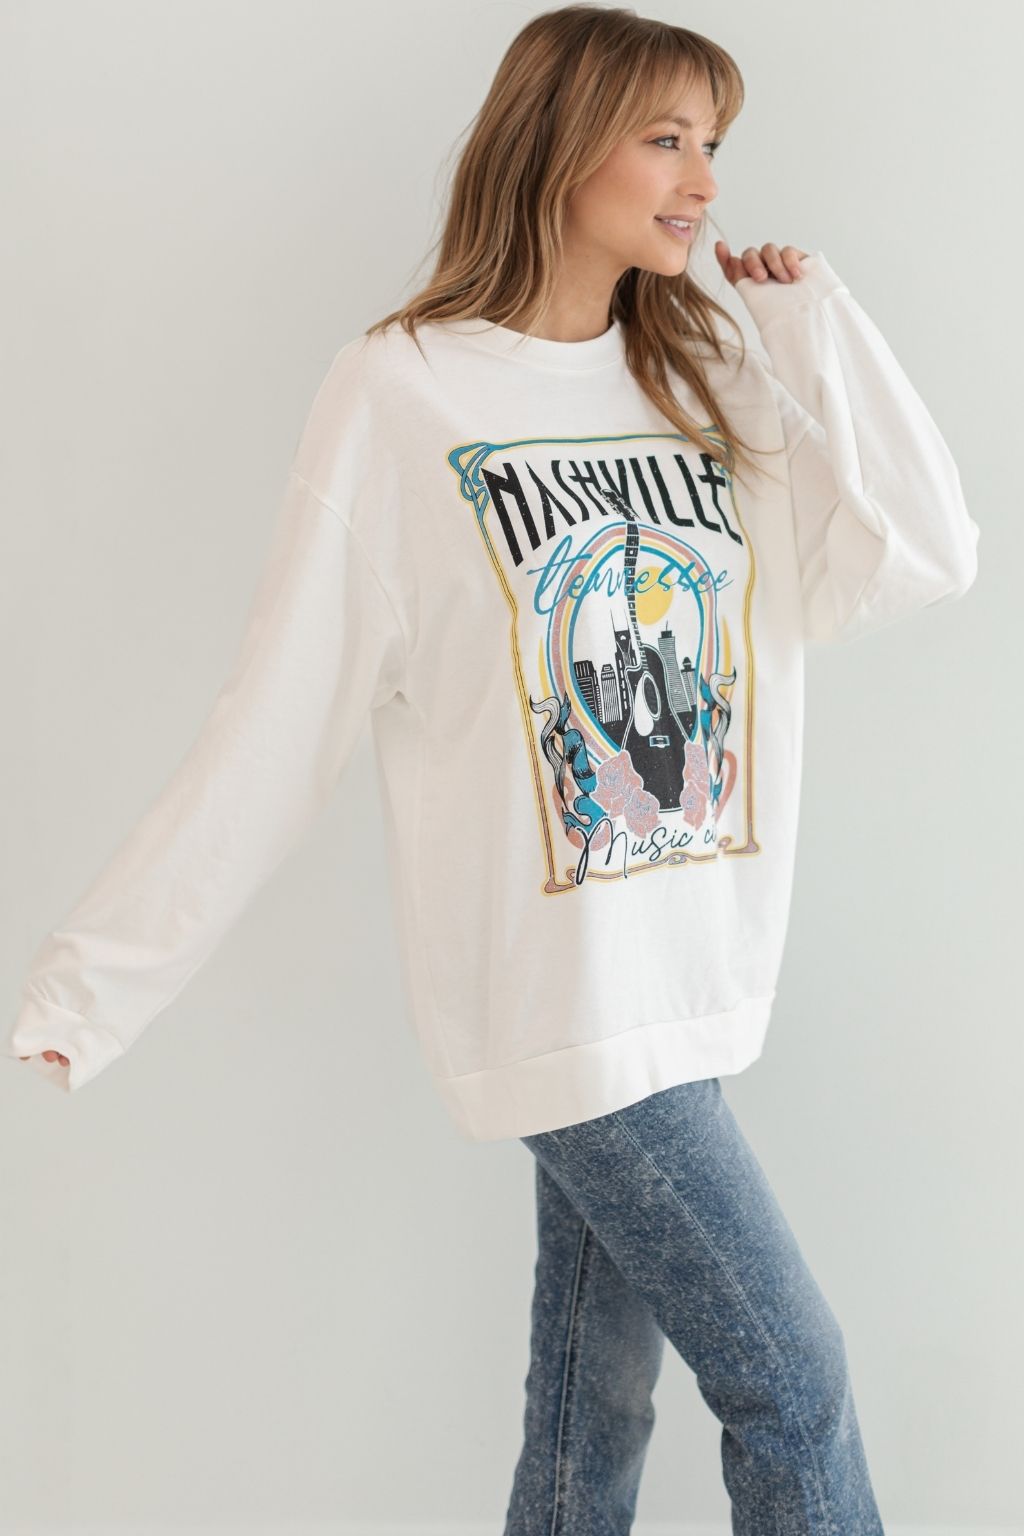 Nashville Music City Guitar Sweatshirt